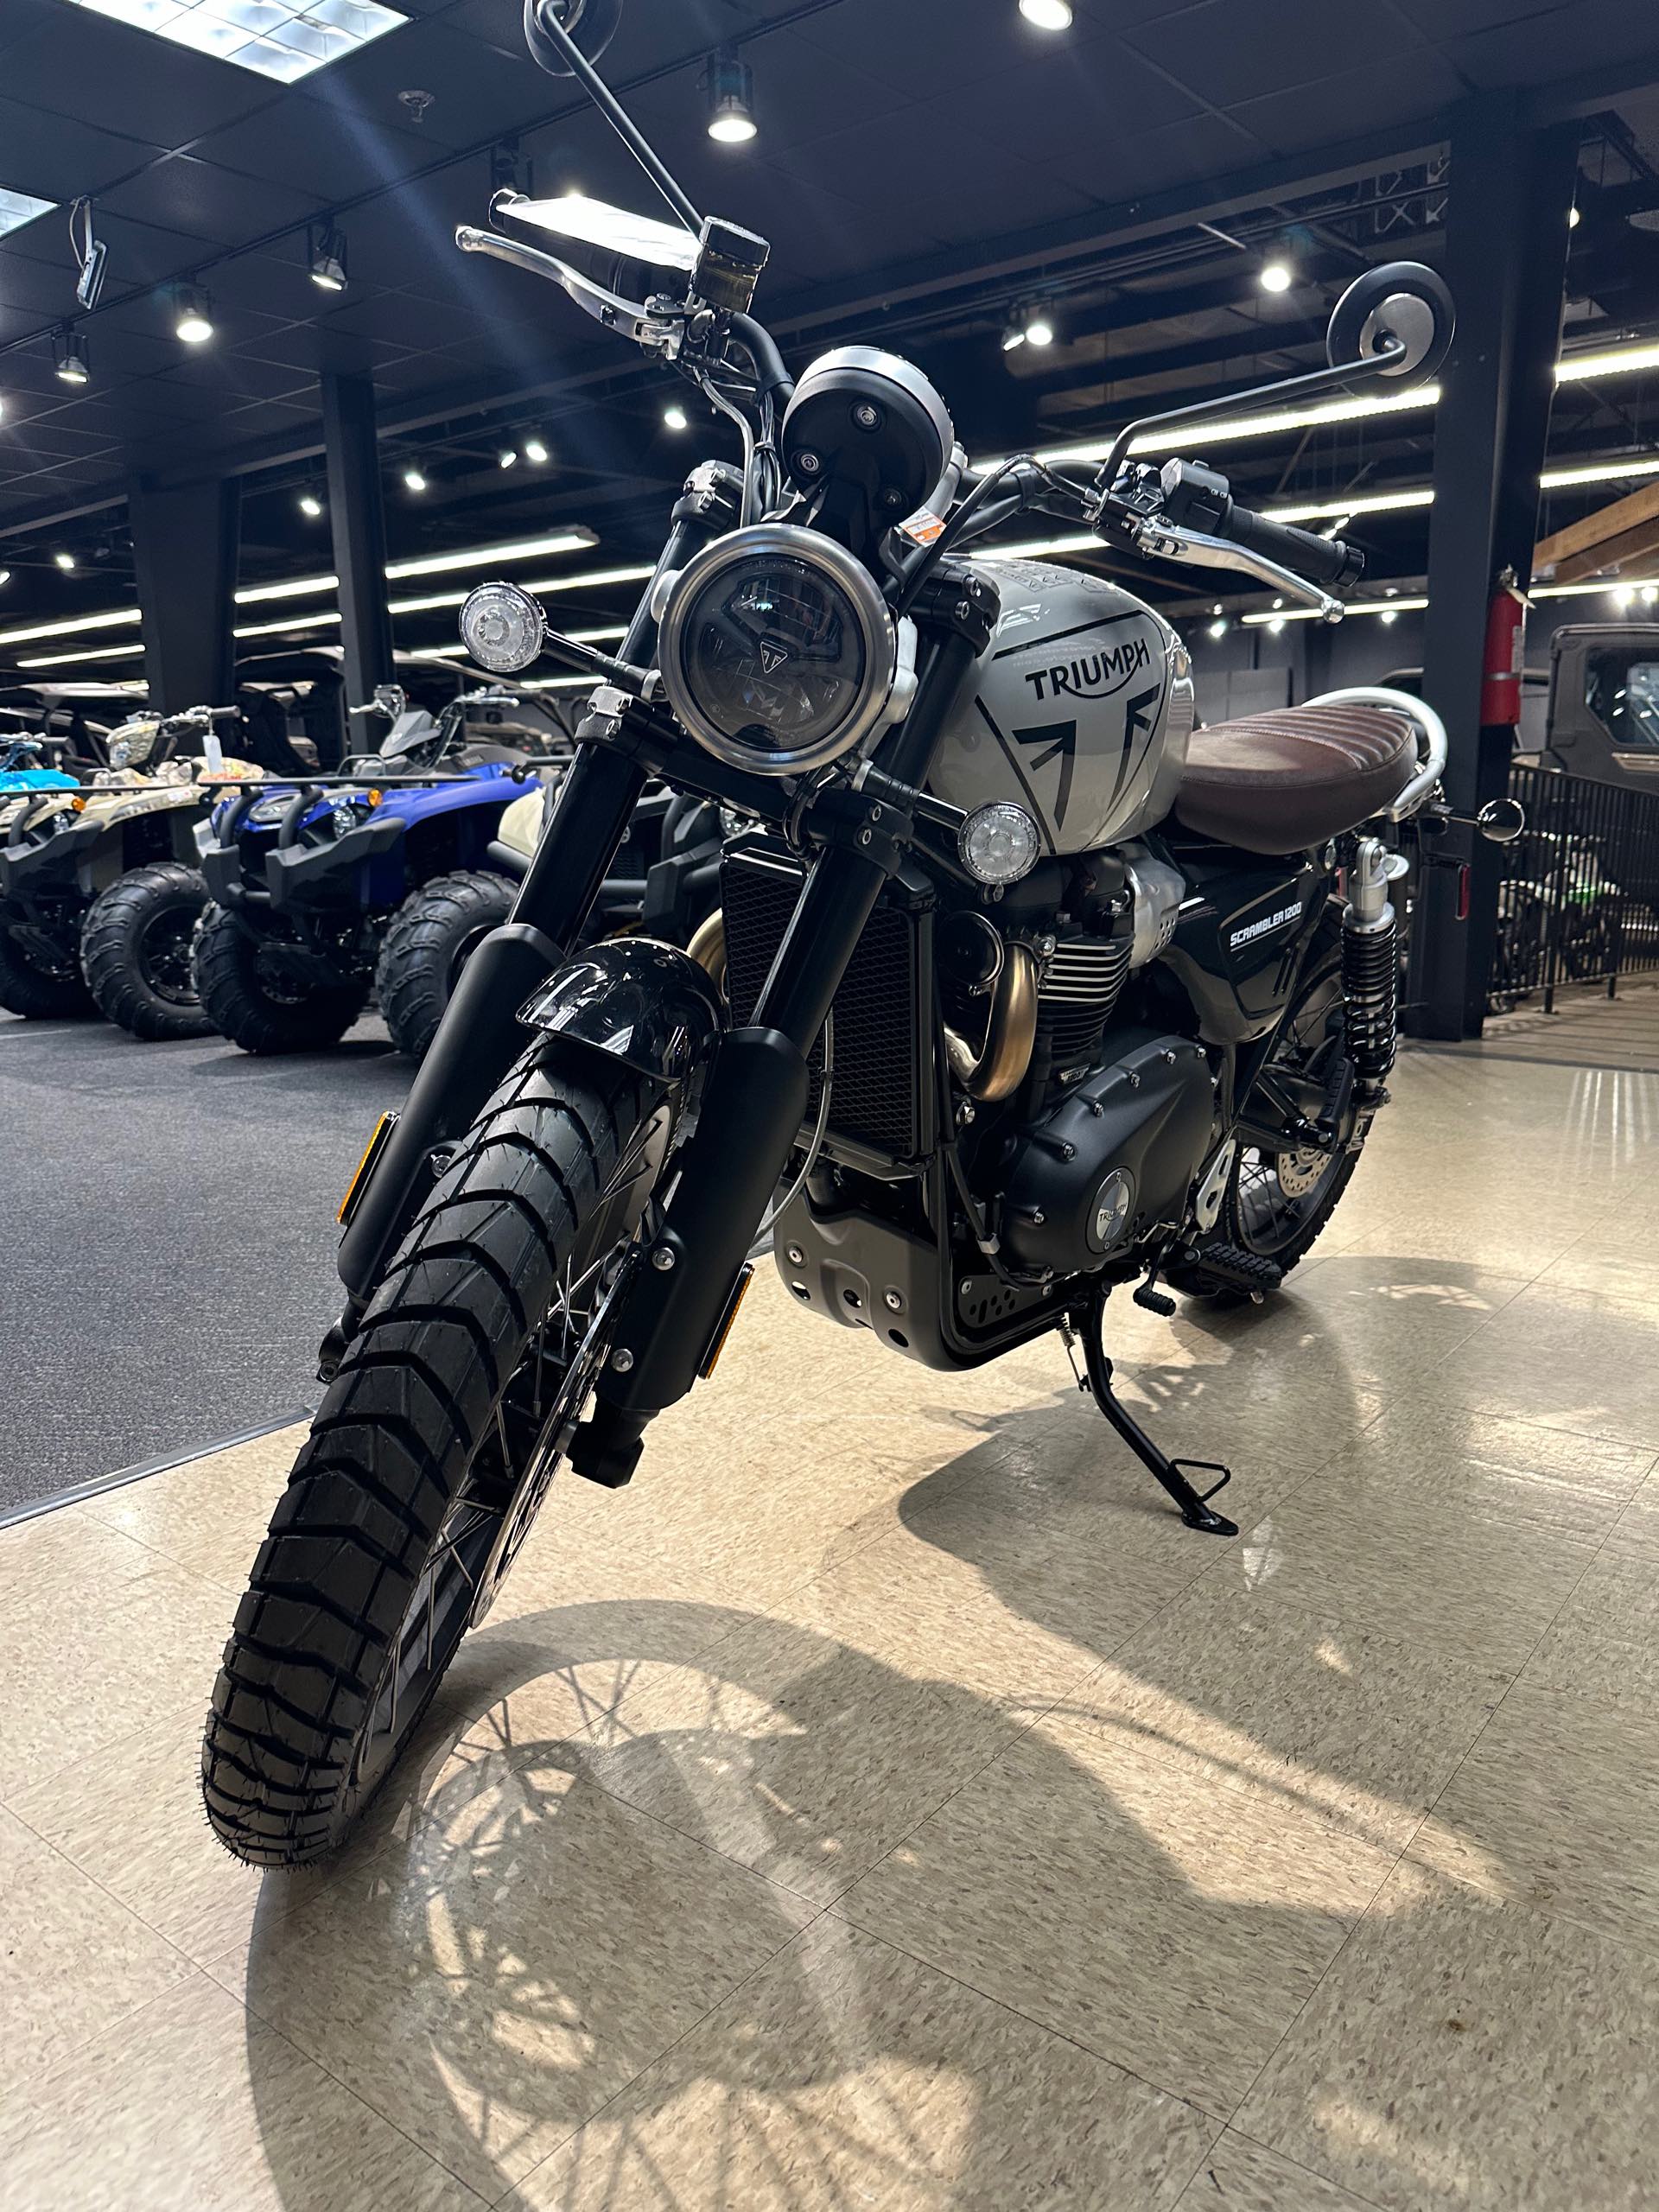 2024 Triumph Scrambler 1200 X at Sloans Motorcycle ATV, Murfreesboro, TN, 37129